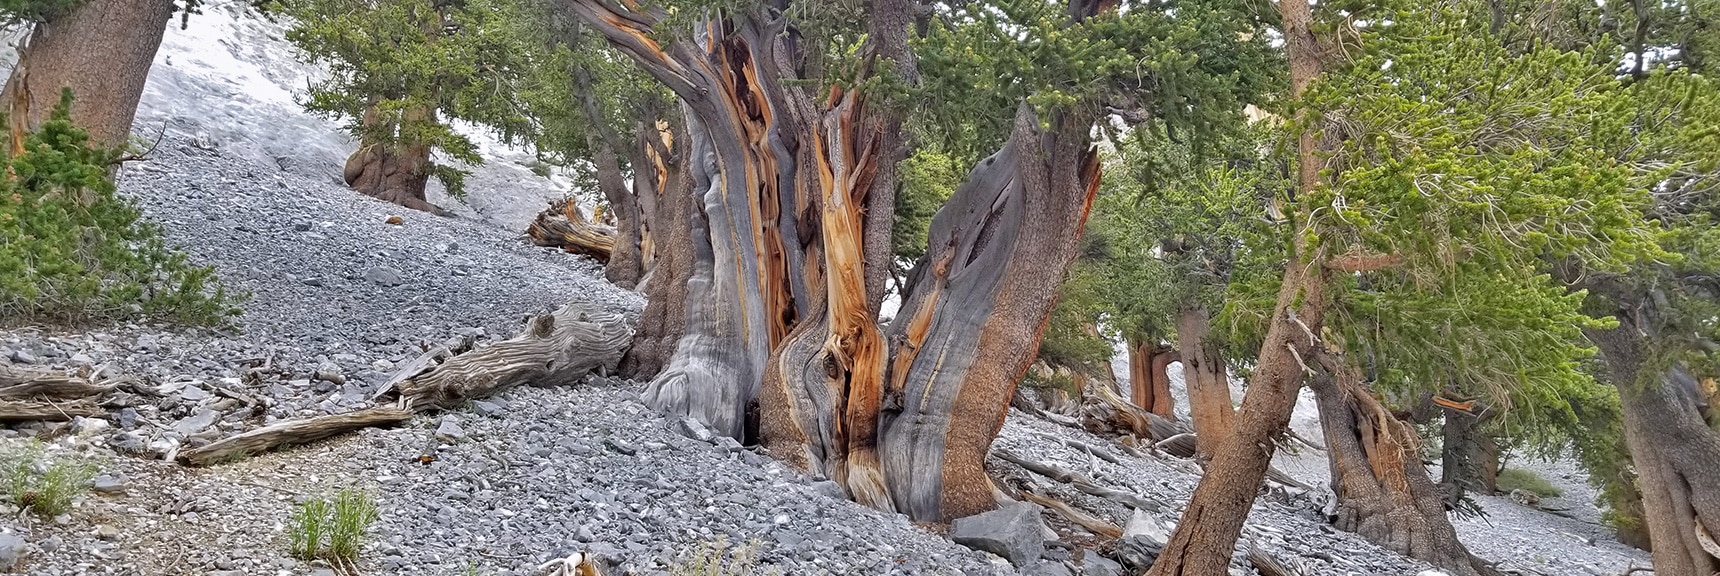 Impressive Ancient Bristlecone Pines Growing on the Avalanche Slope Below the NE Cliff Descent Chute. | Mummy Mountain NE Cliffs Descent | Mt Charleston Wilderness | Spring Mountains, Nevada